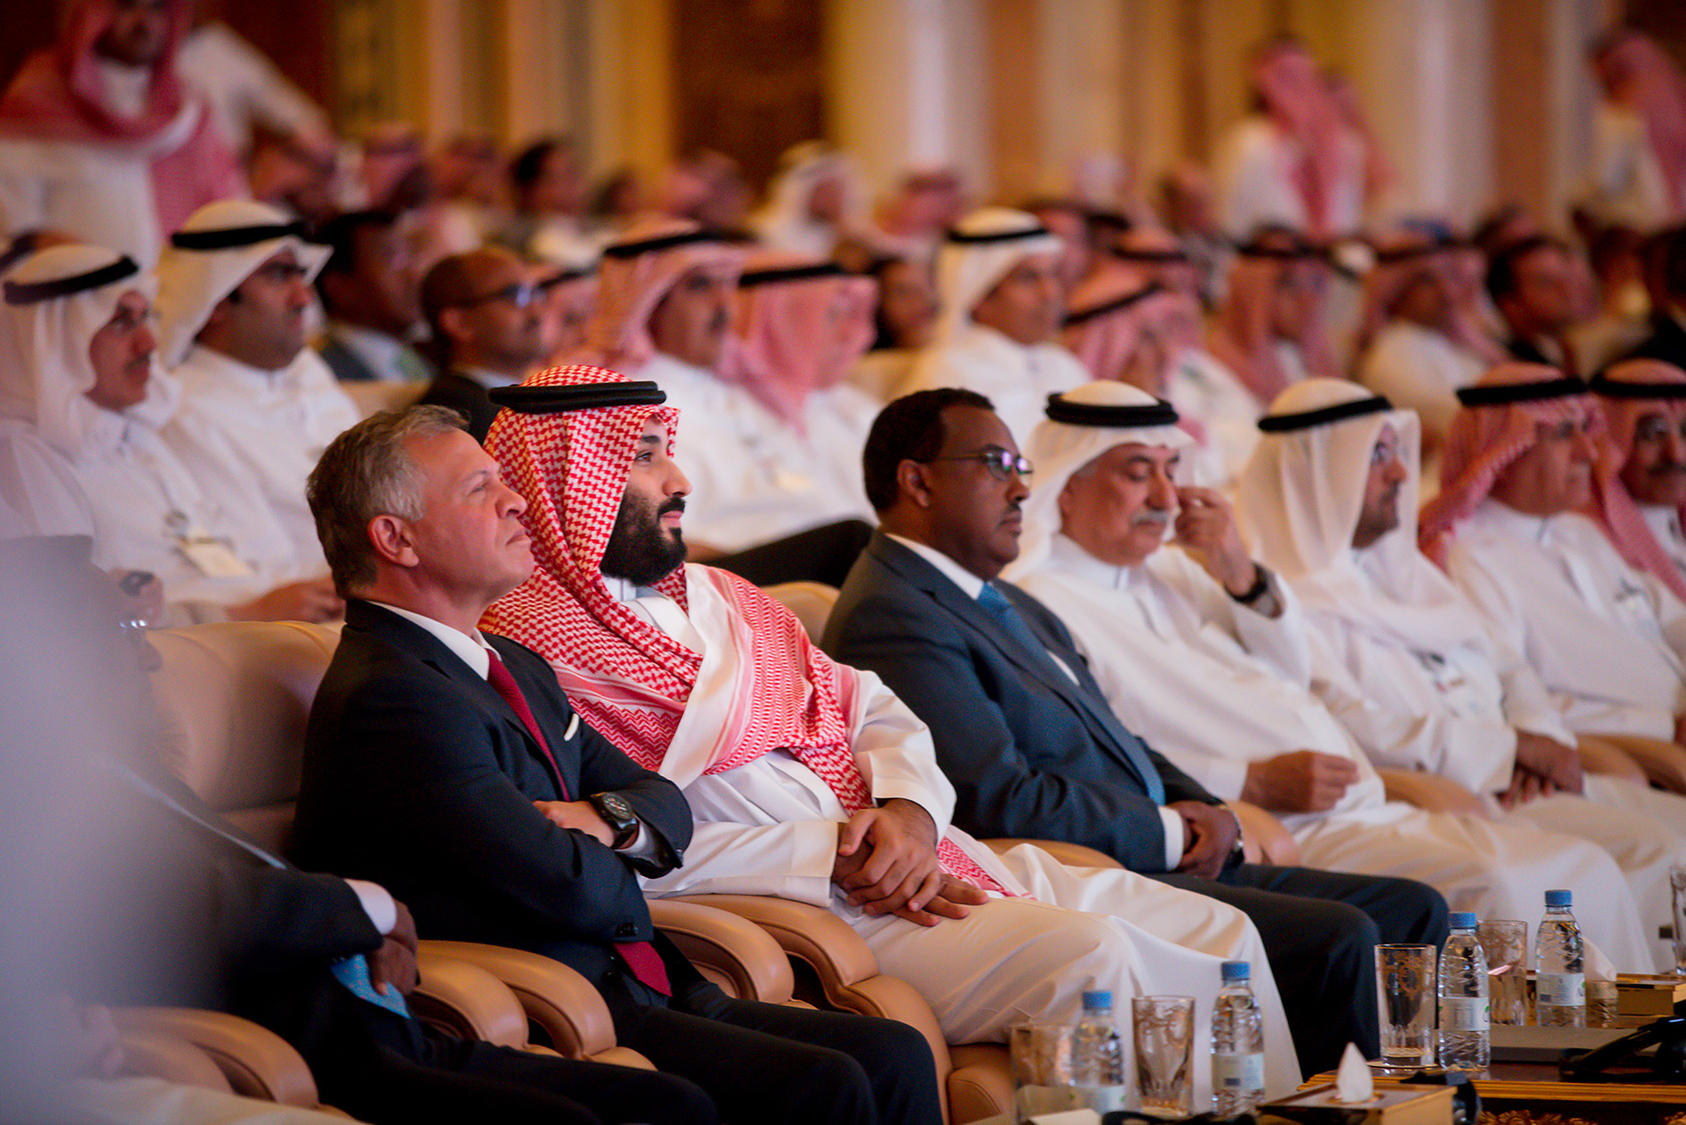 Saudi Arabia’s crown prince, Mohammed bin Salman, second from left, sits next to King Abdullah II of Jordan, left, in Riyadh, Saudi Arabia, on Tuesday, Oct. 23, 2018. (Tasneem Alsultan/The New York Times)